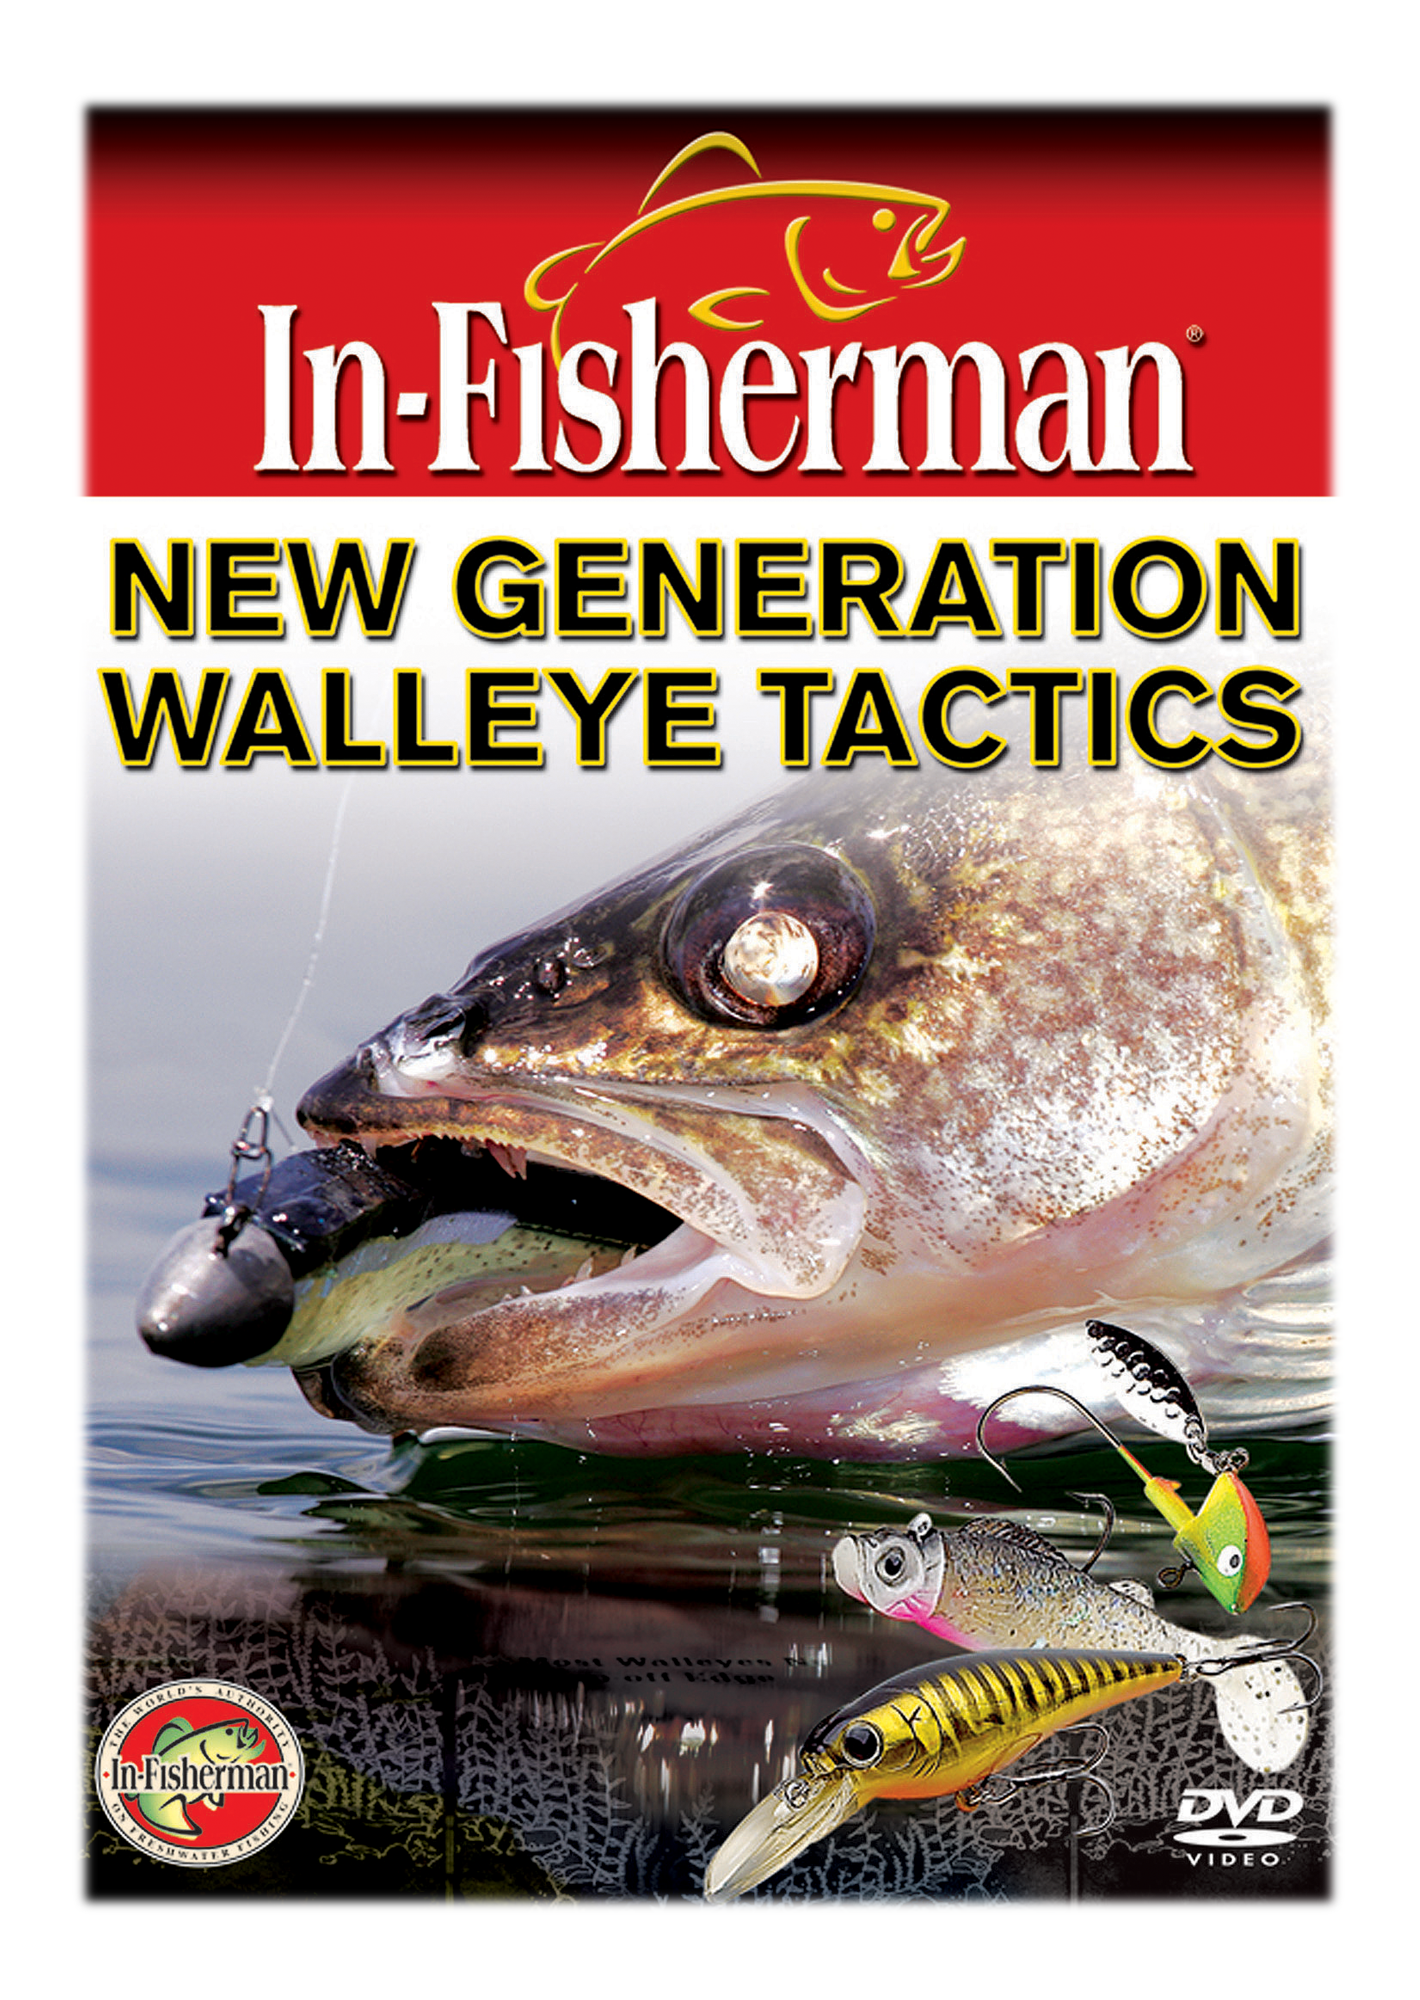 In-Fisherman New Generation Walleye Tactics Video - DVD